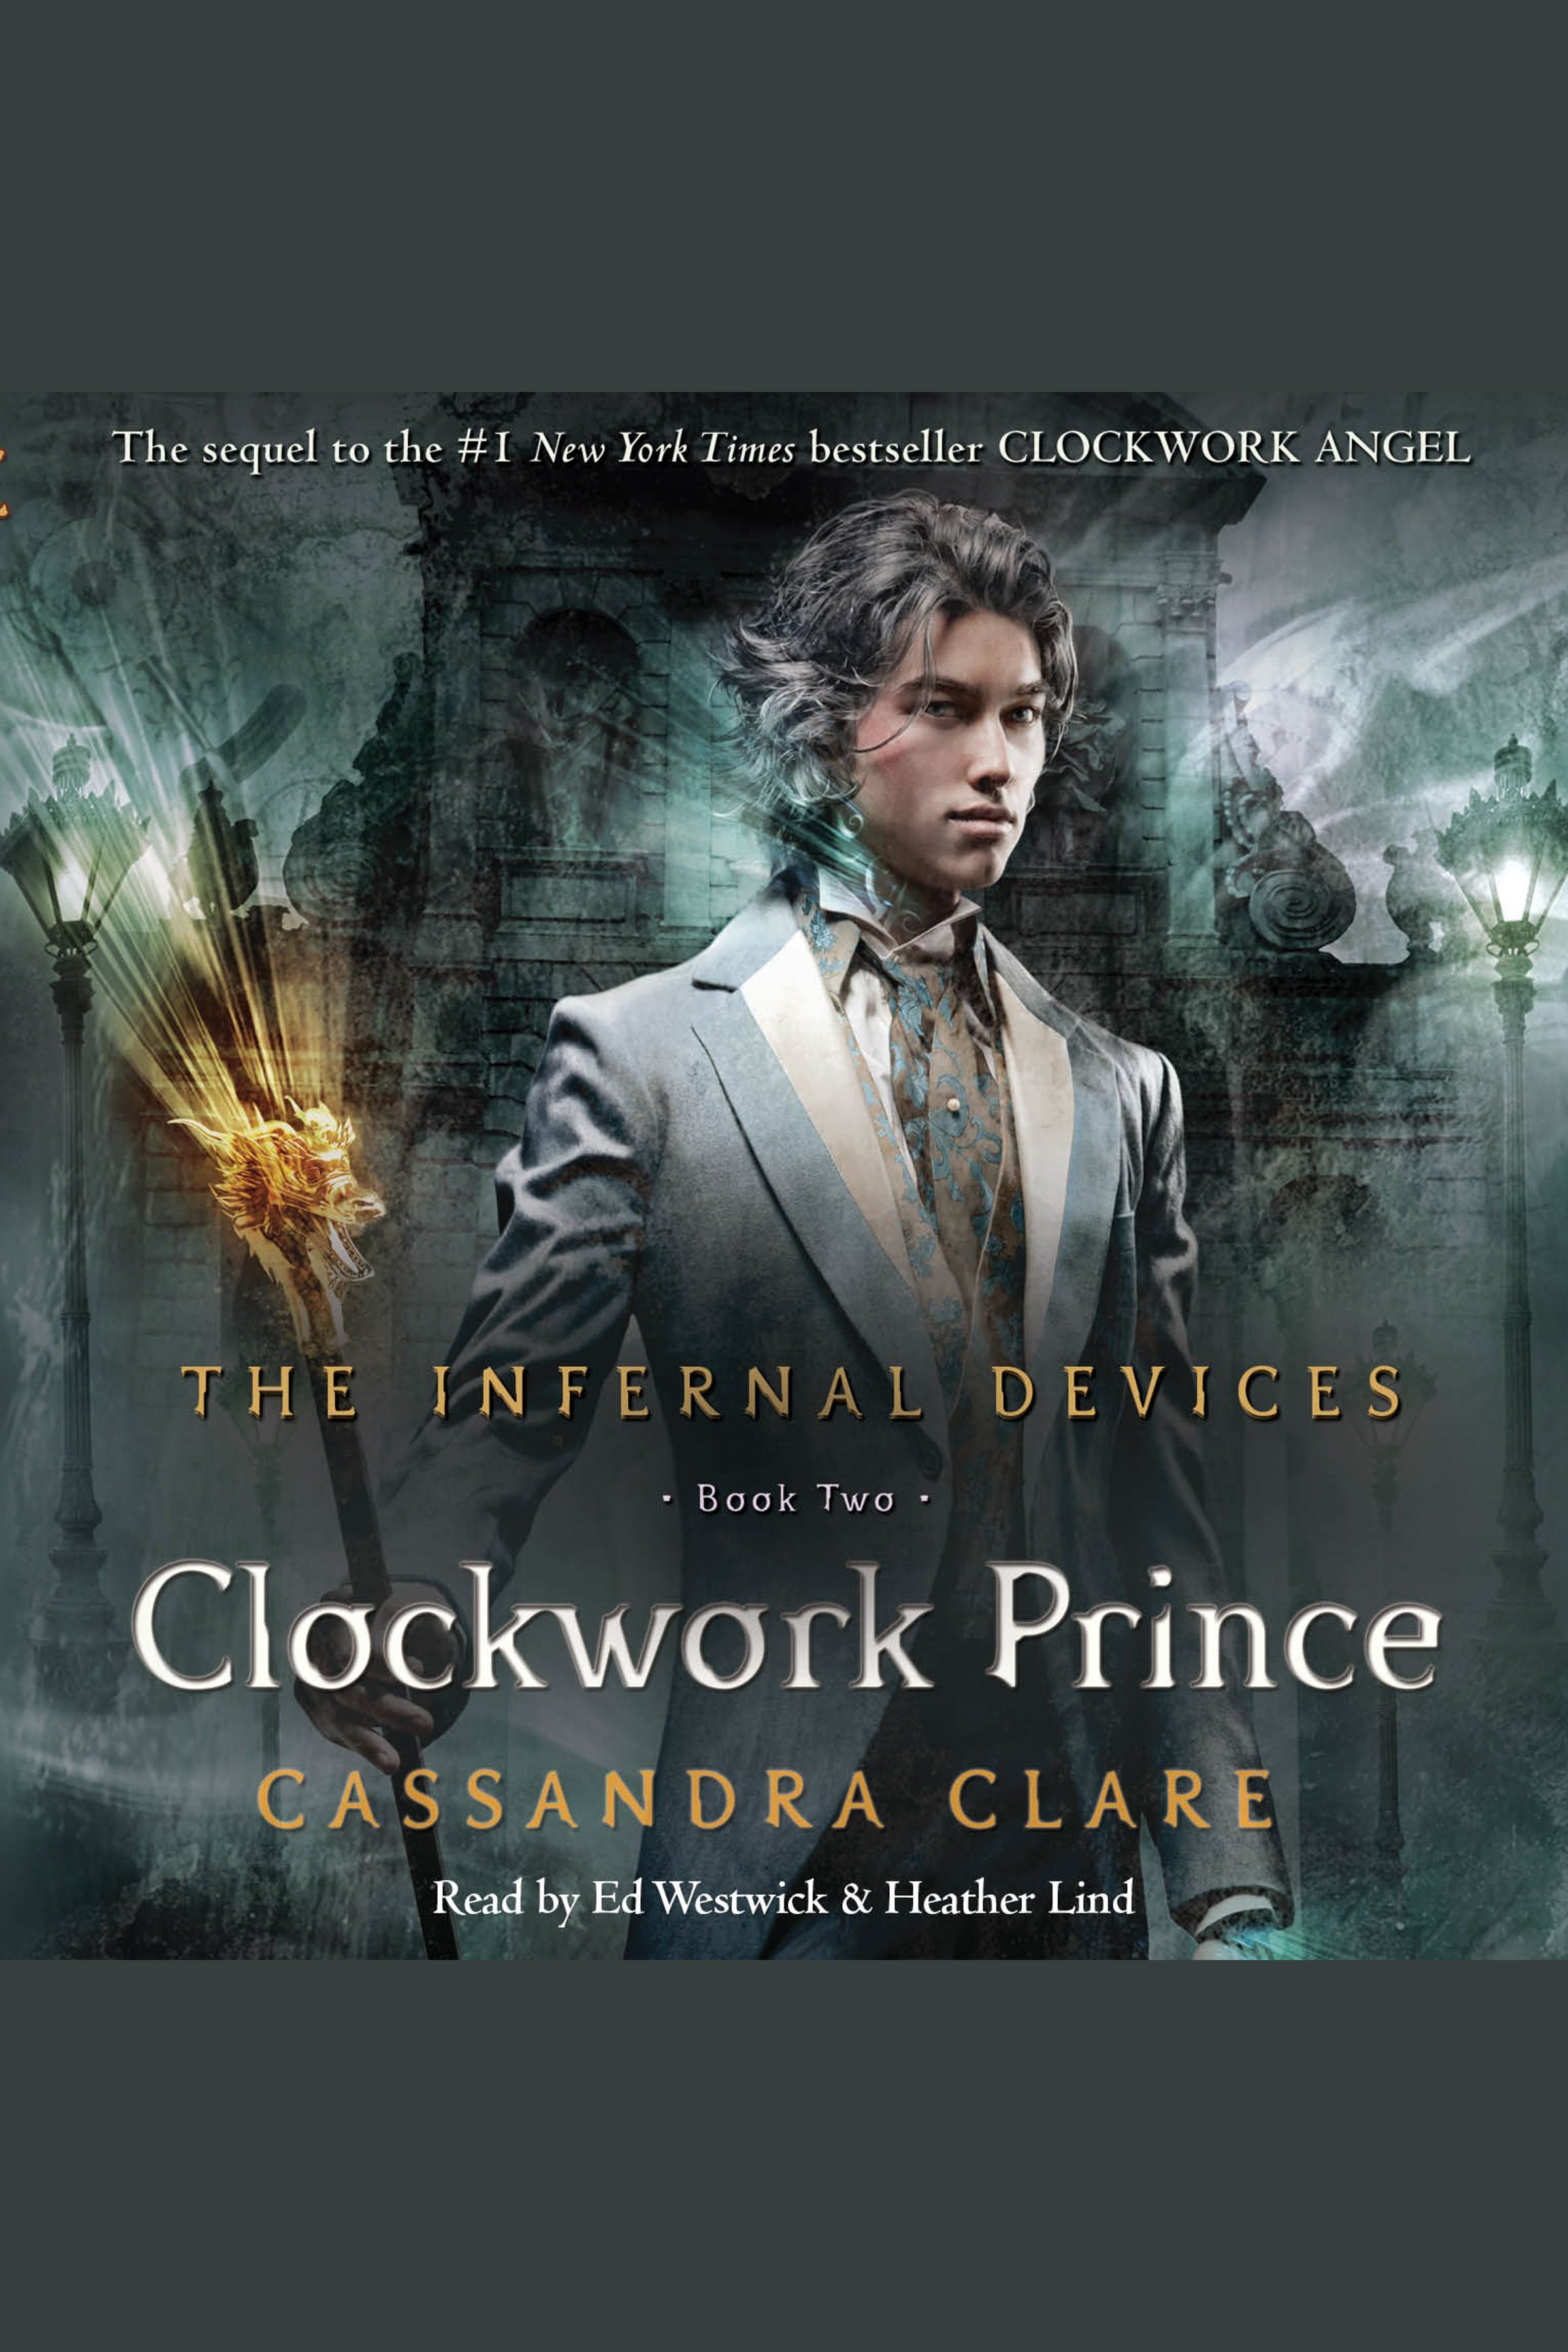 Clockwork prince cover image